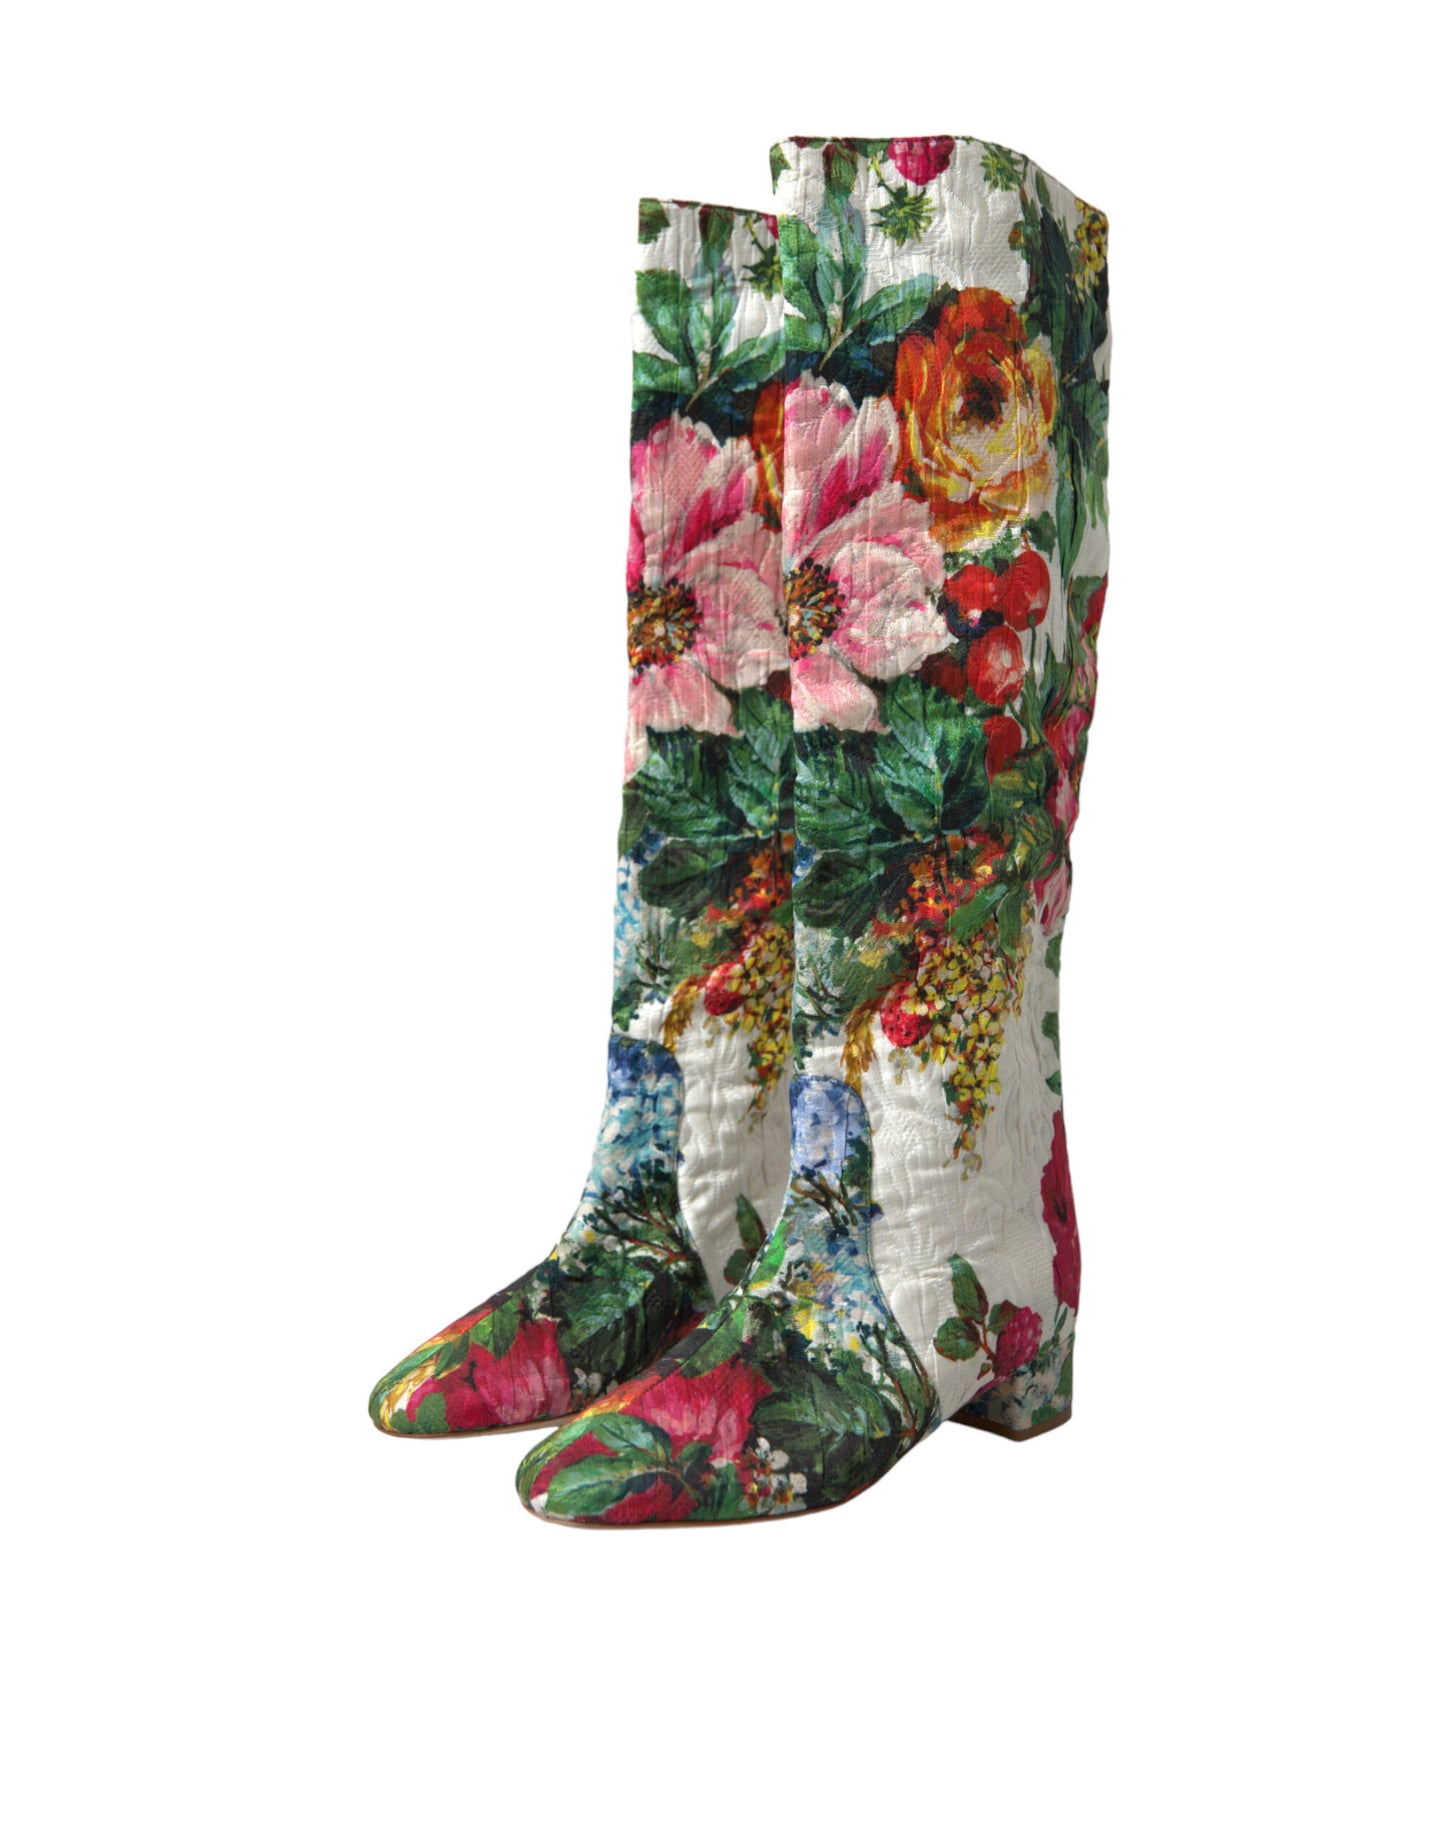 Floral Brocade Knee High Boots